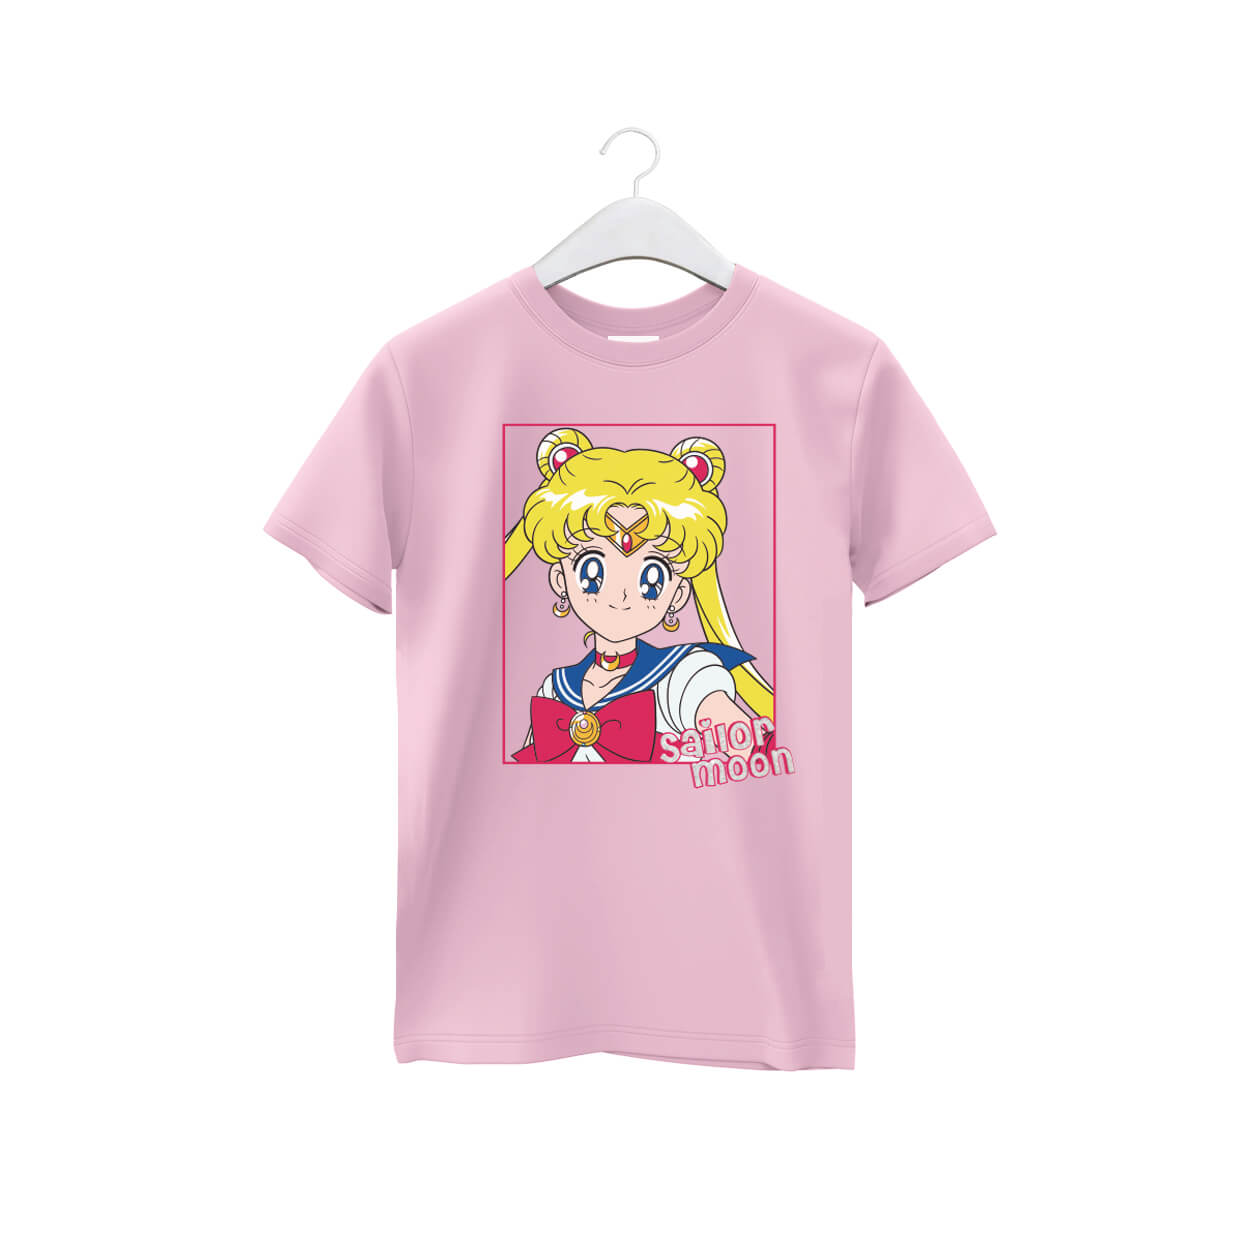 Sailor Moon Ladies Graphic T-Shirt I COMMON SENSE